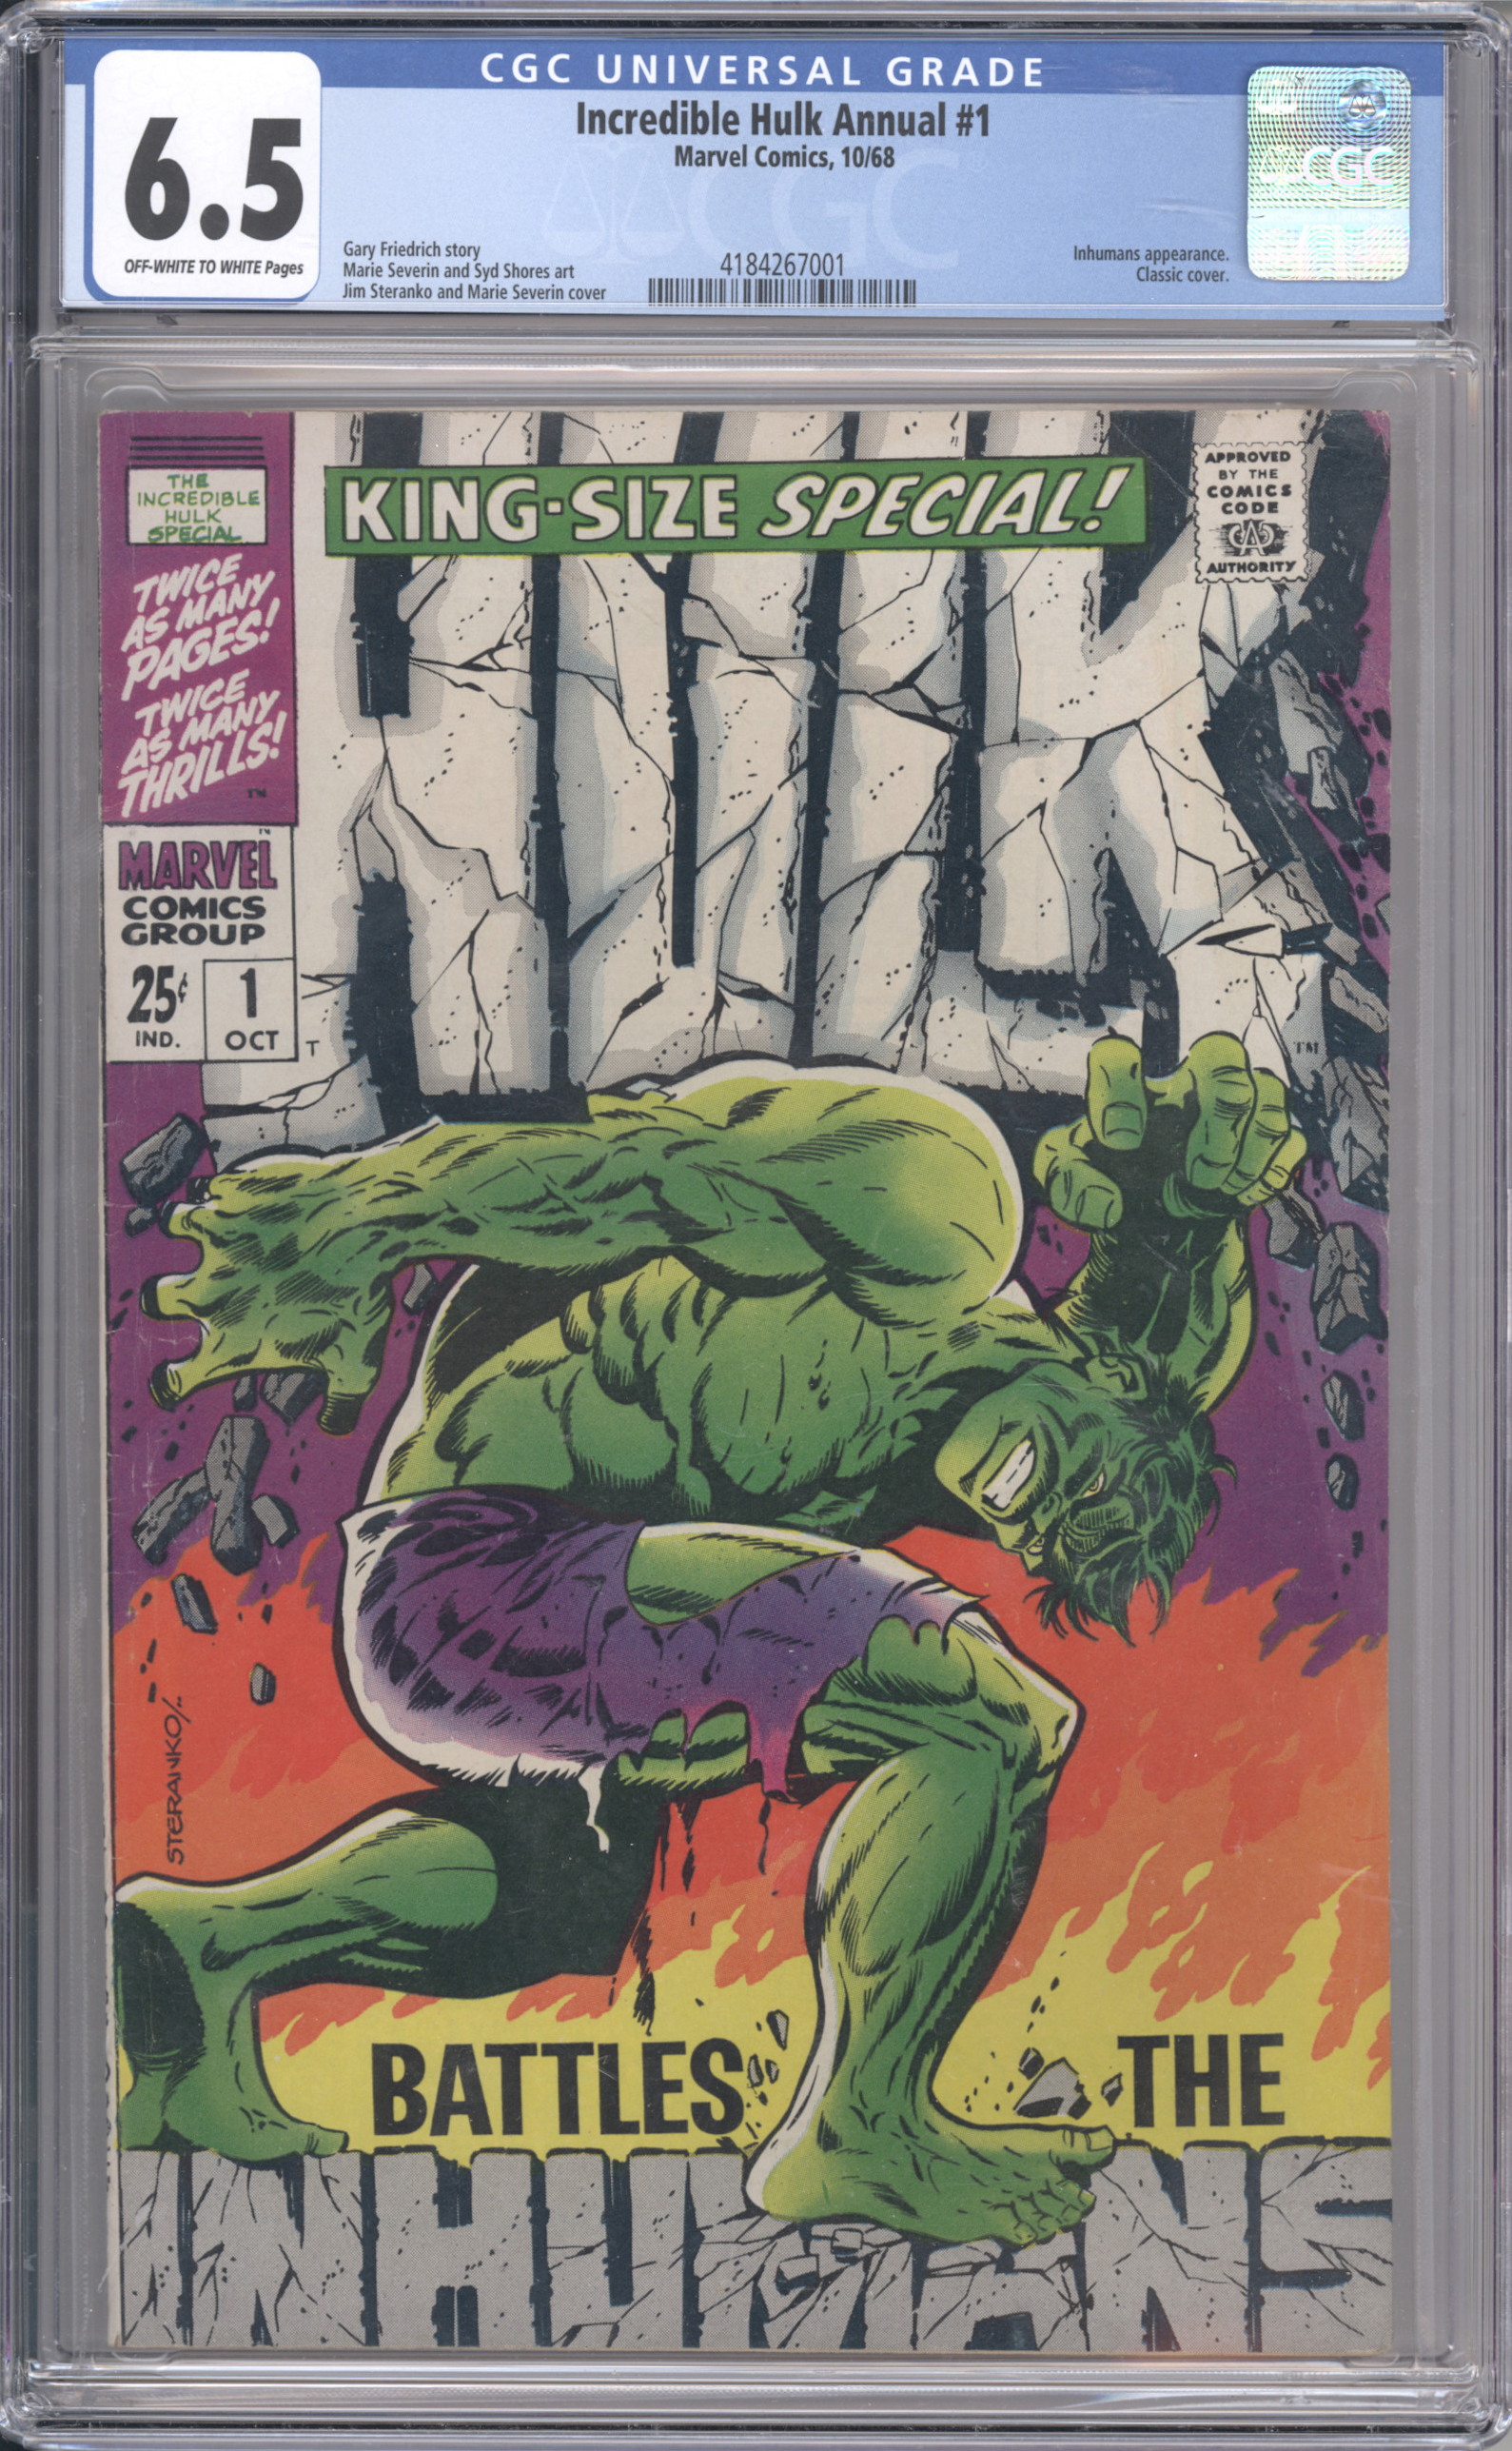 Incredible Hulk Annual #1 front